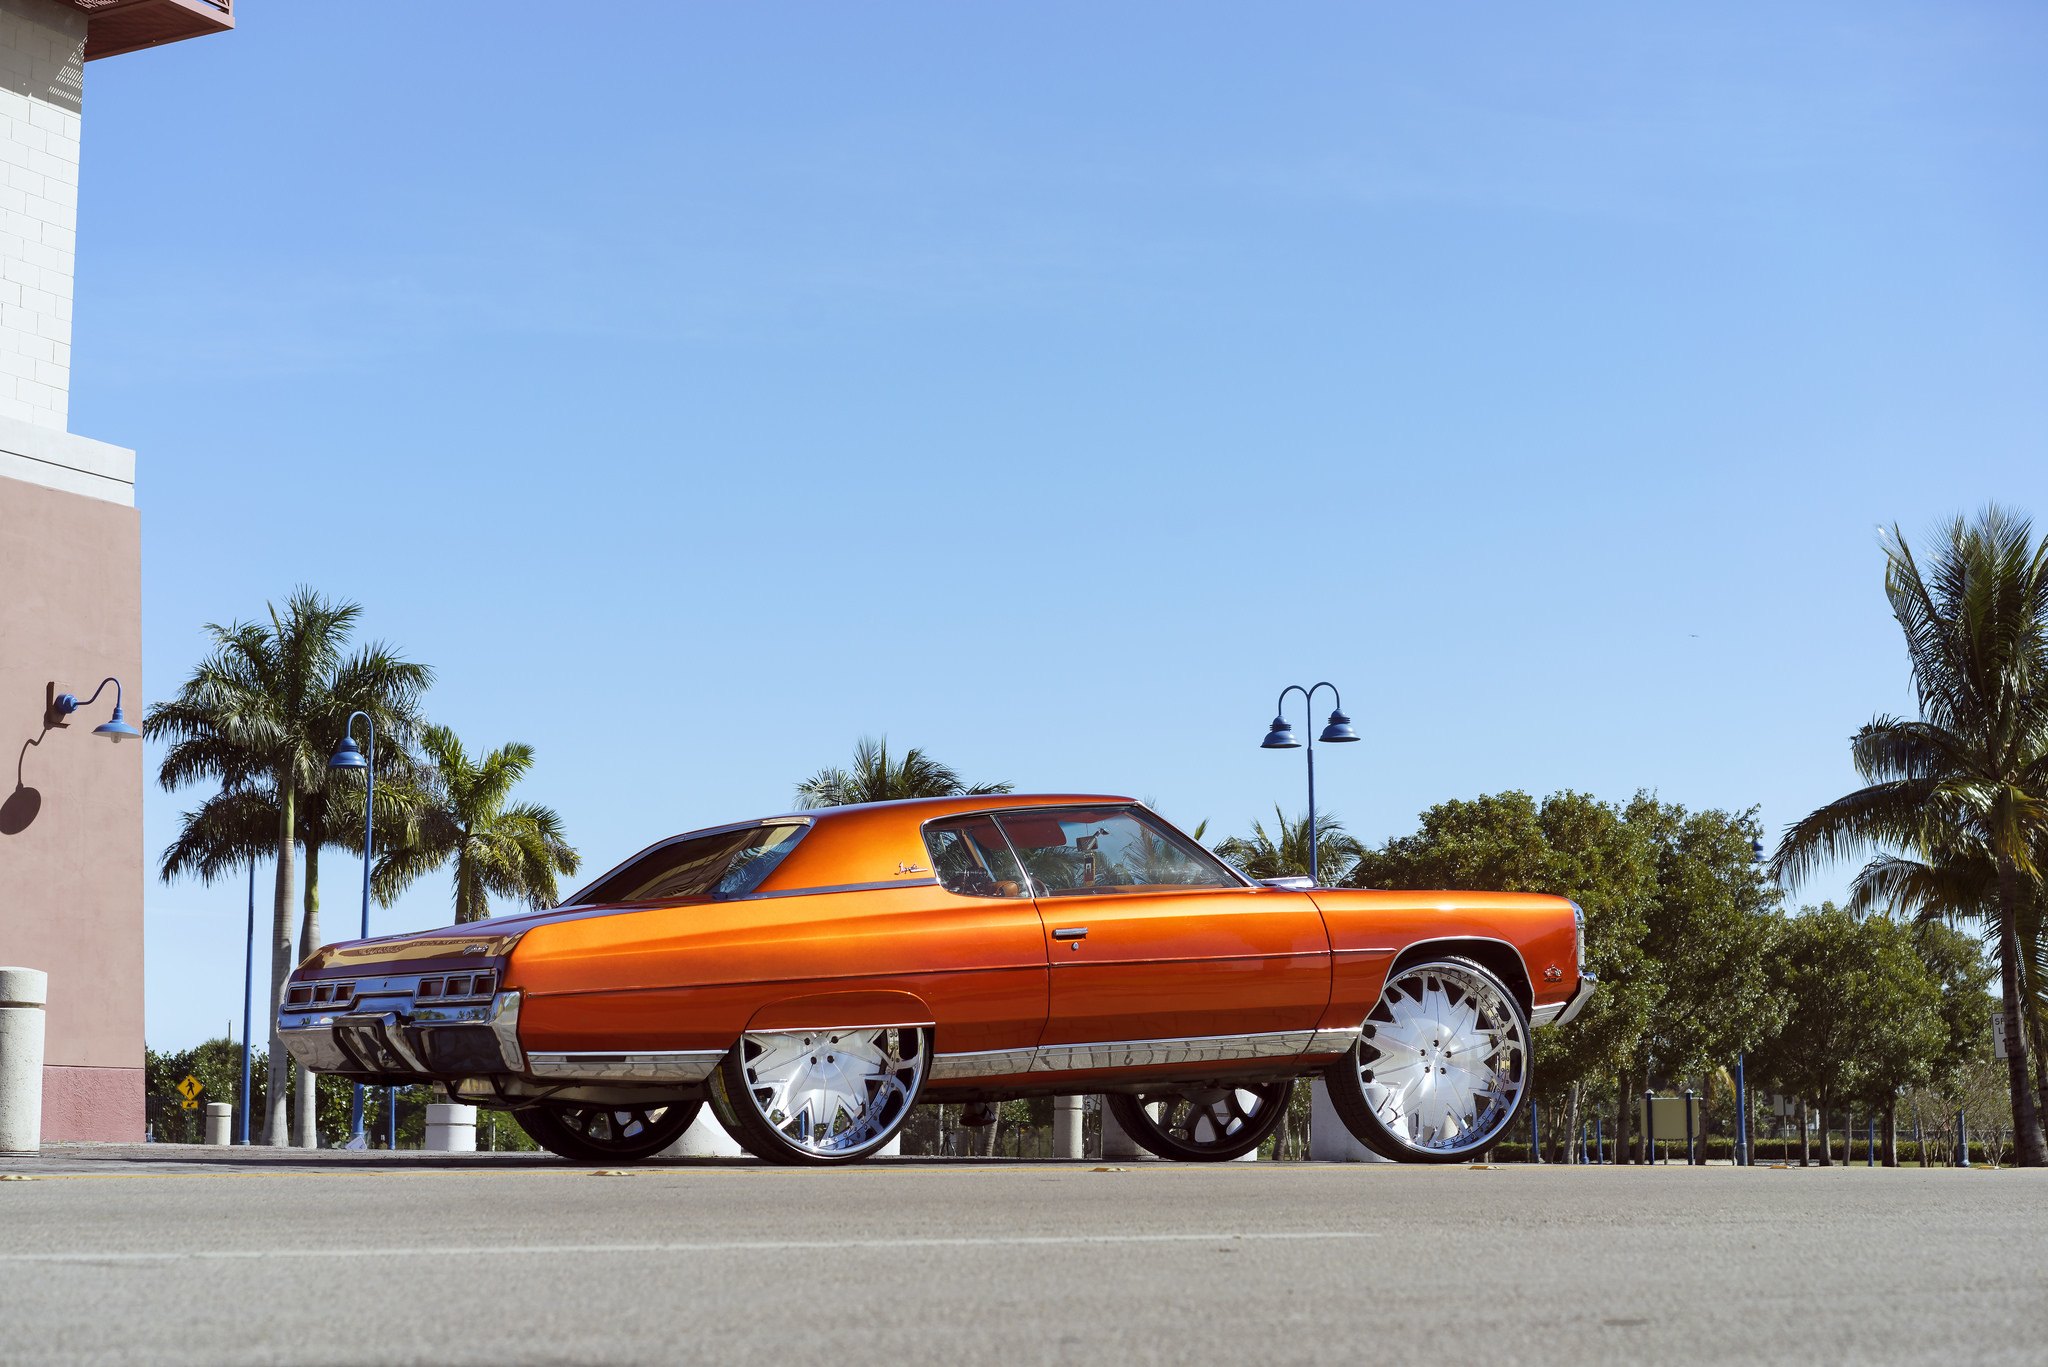 Orange Chevy Impala with Custom DUB Rims - Photo by DUB